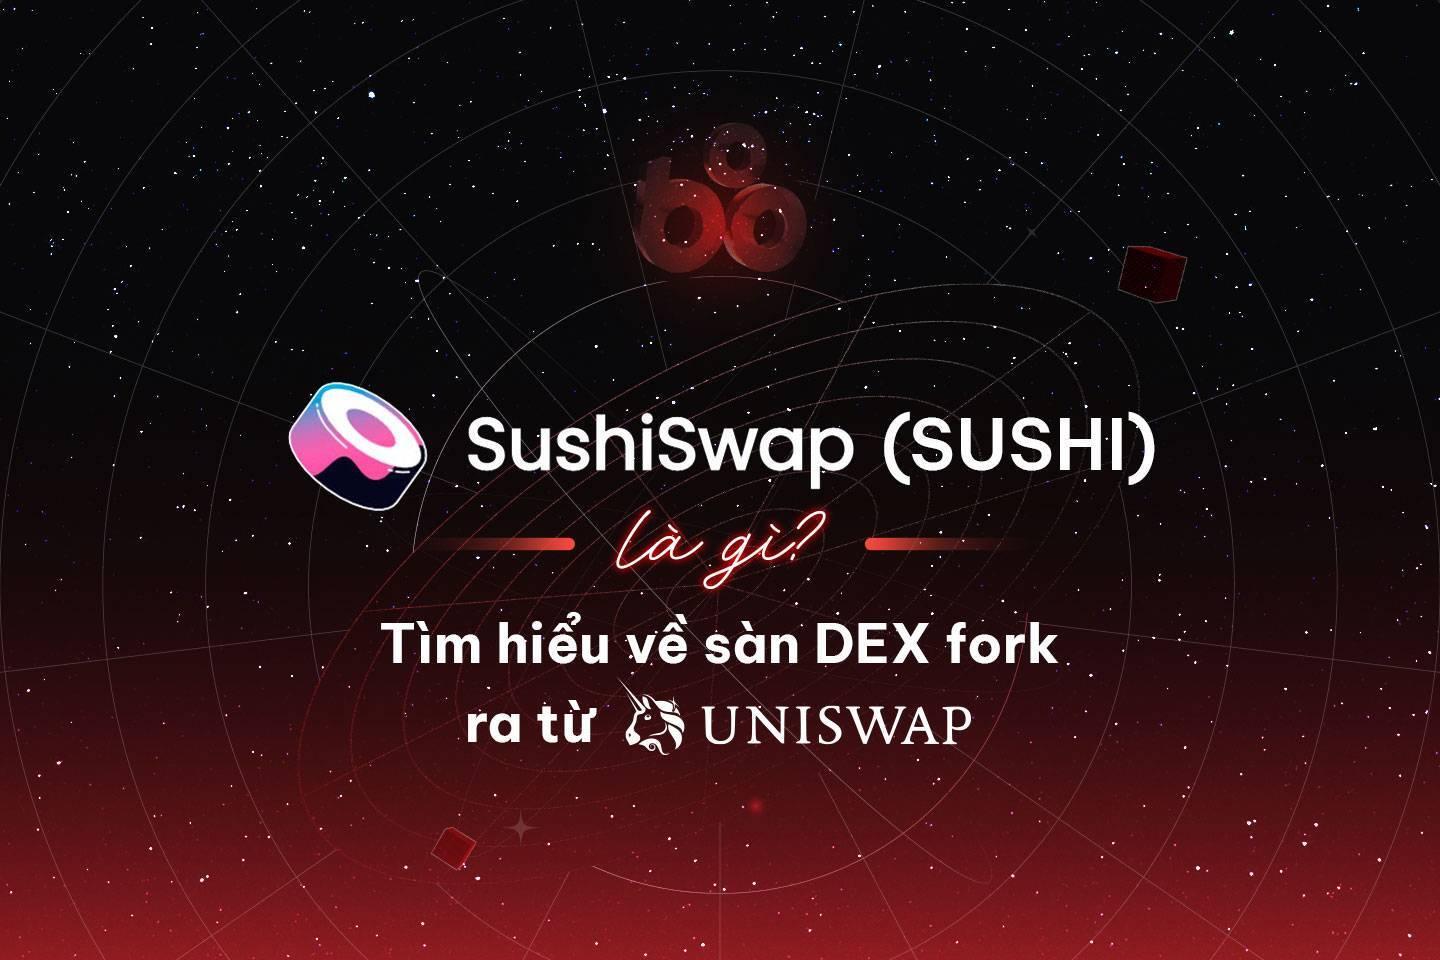 sushiswap-sushi-la-gi-tim-hieu-ve-san-dex-fork-ra-tu-uniswap